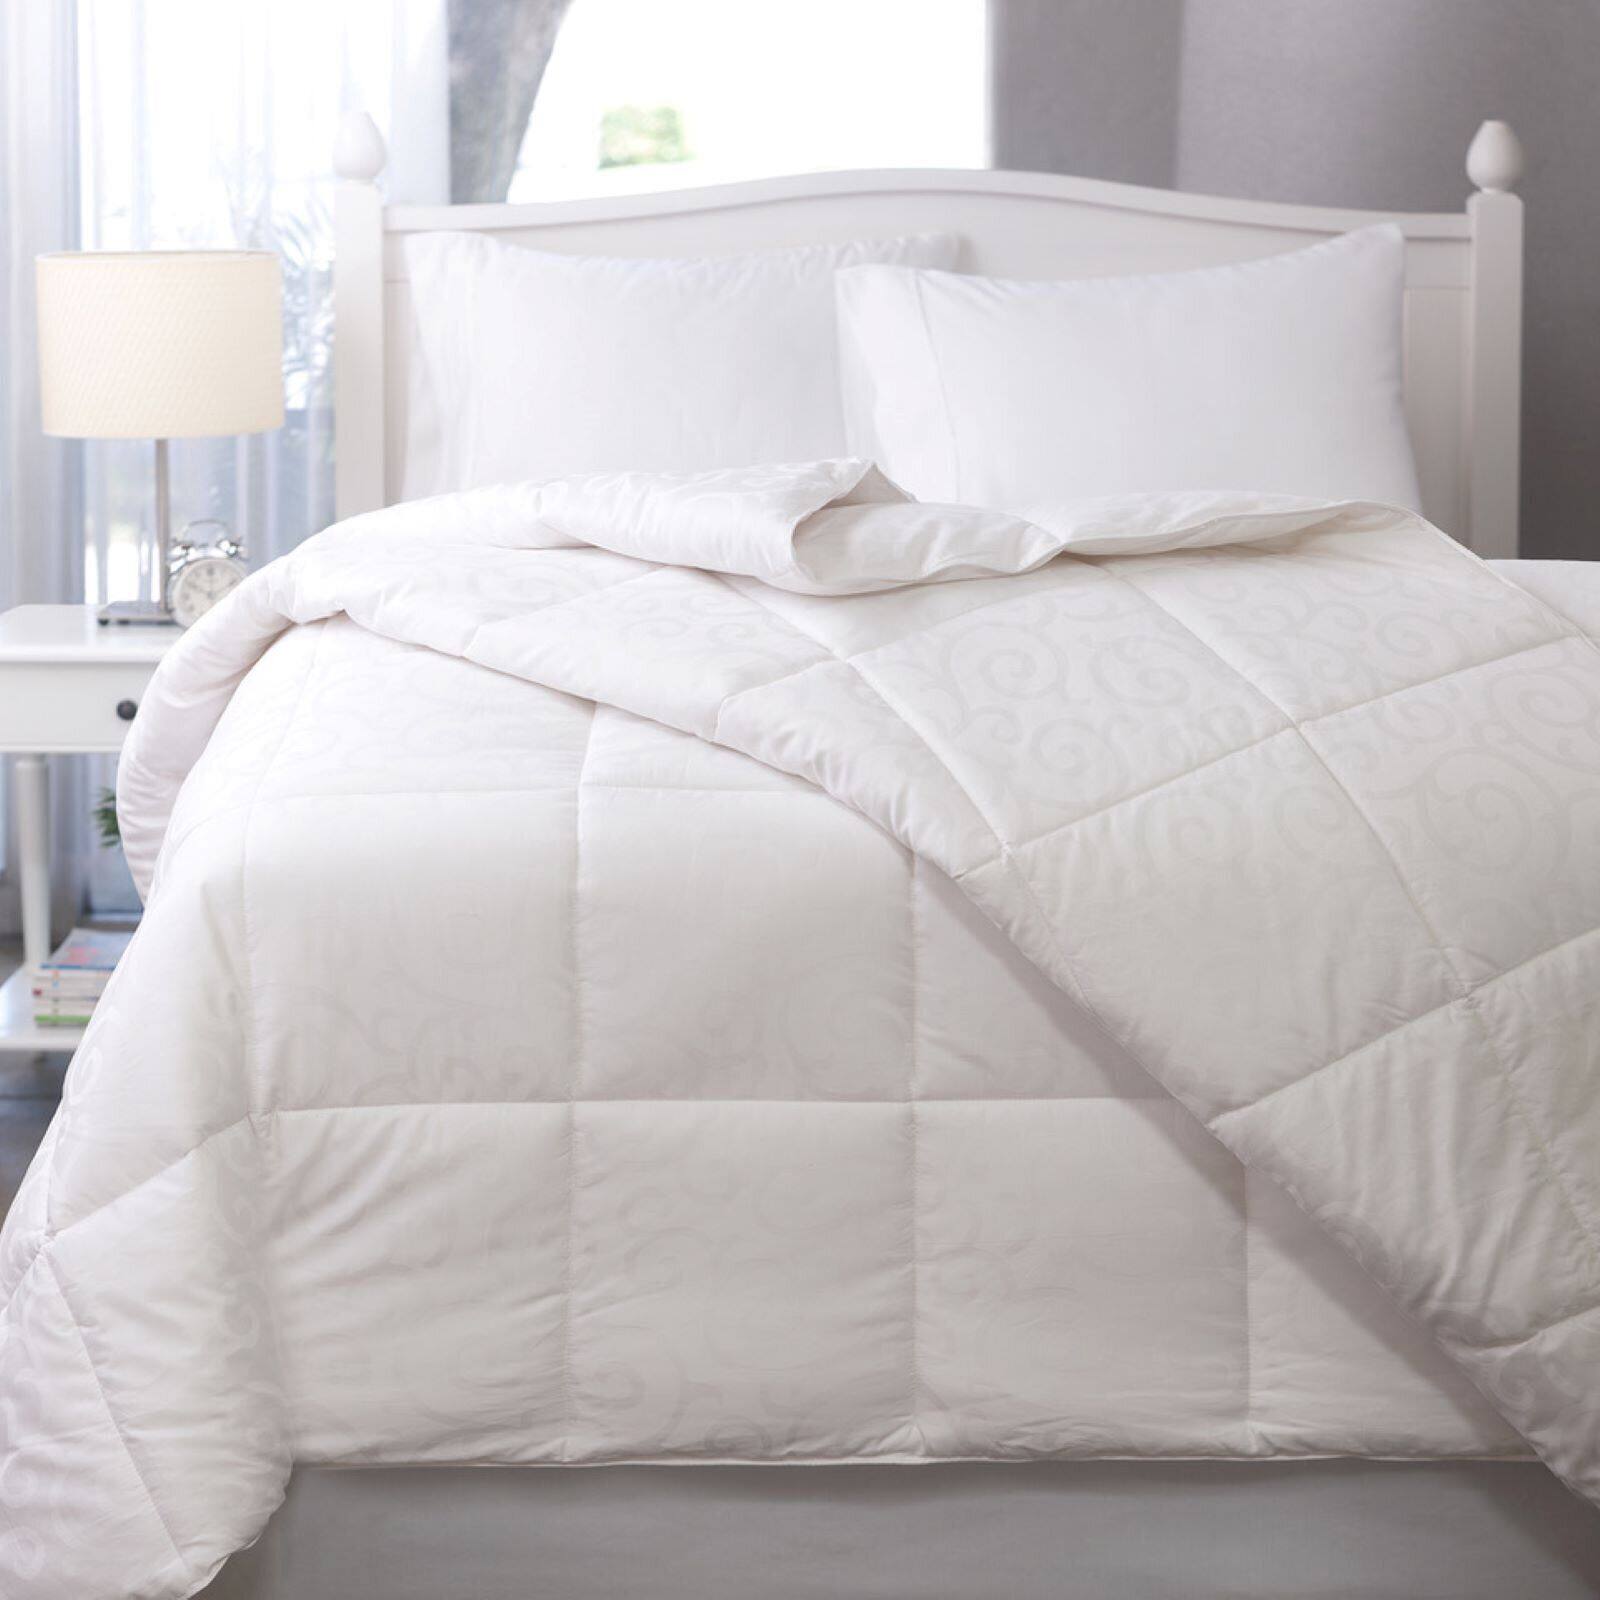 Candice Olson White Luxury Down Alternative Comforter, King